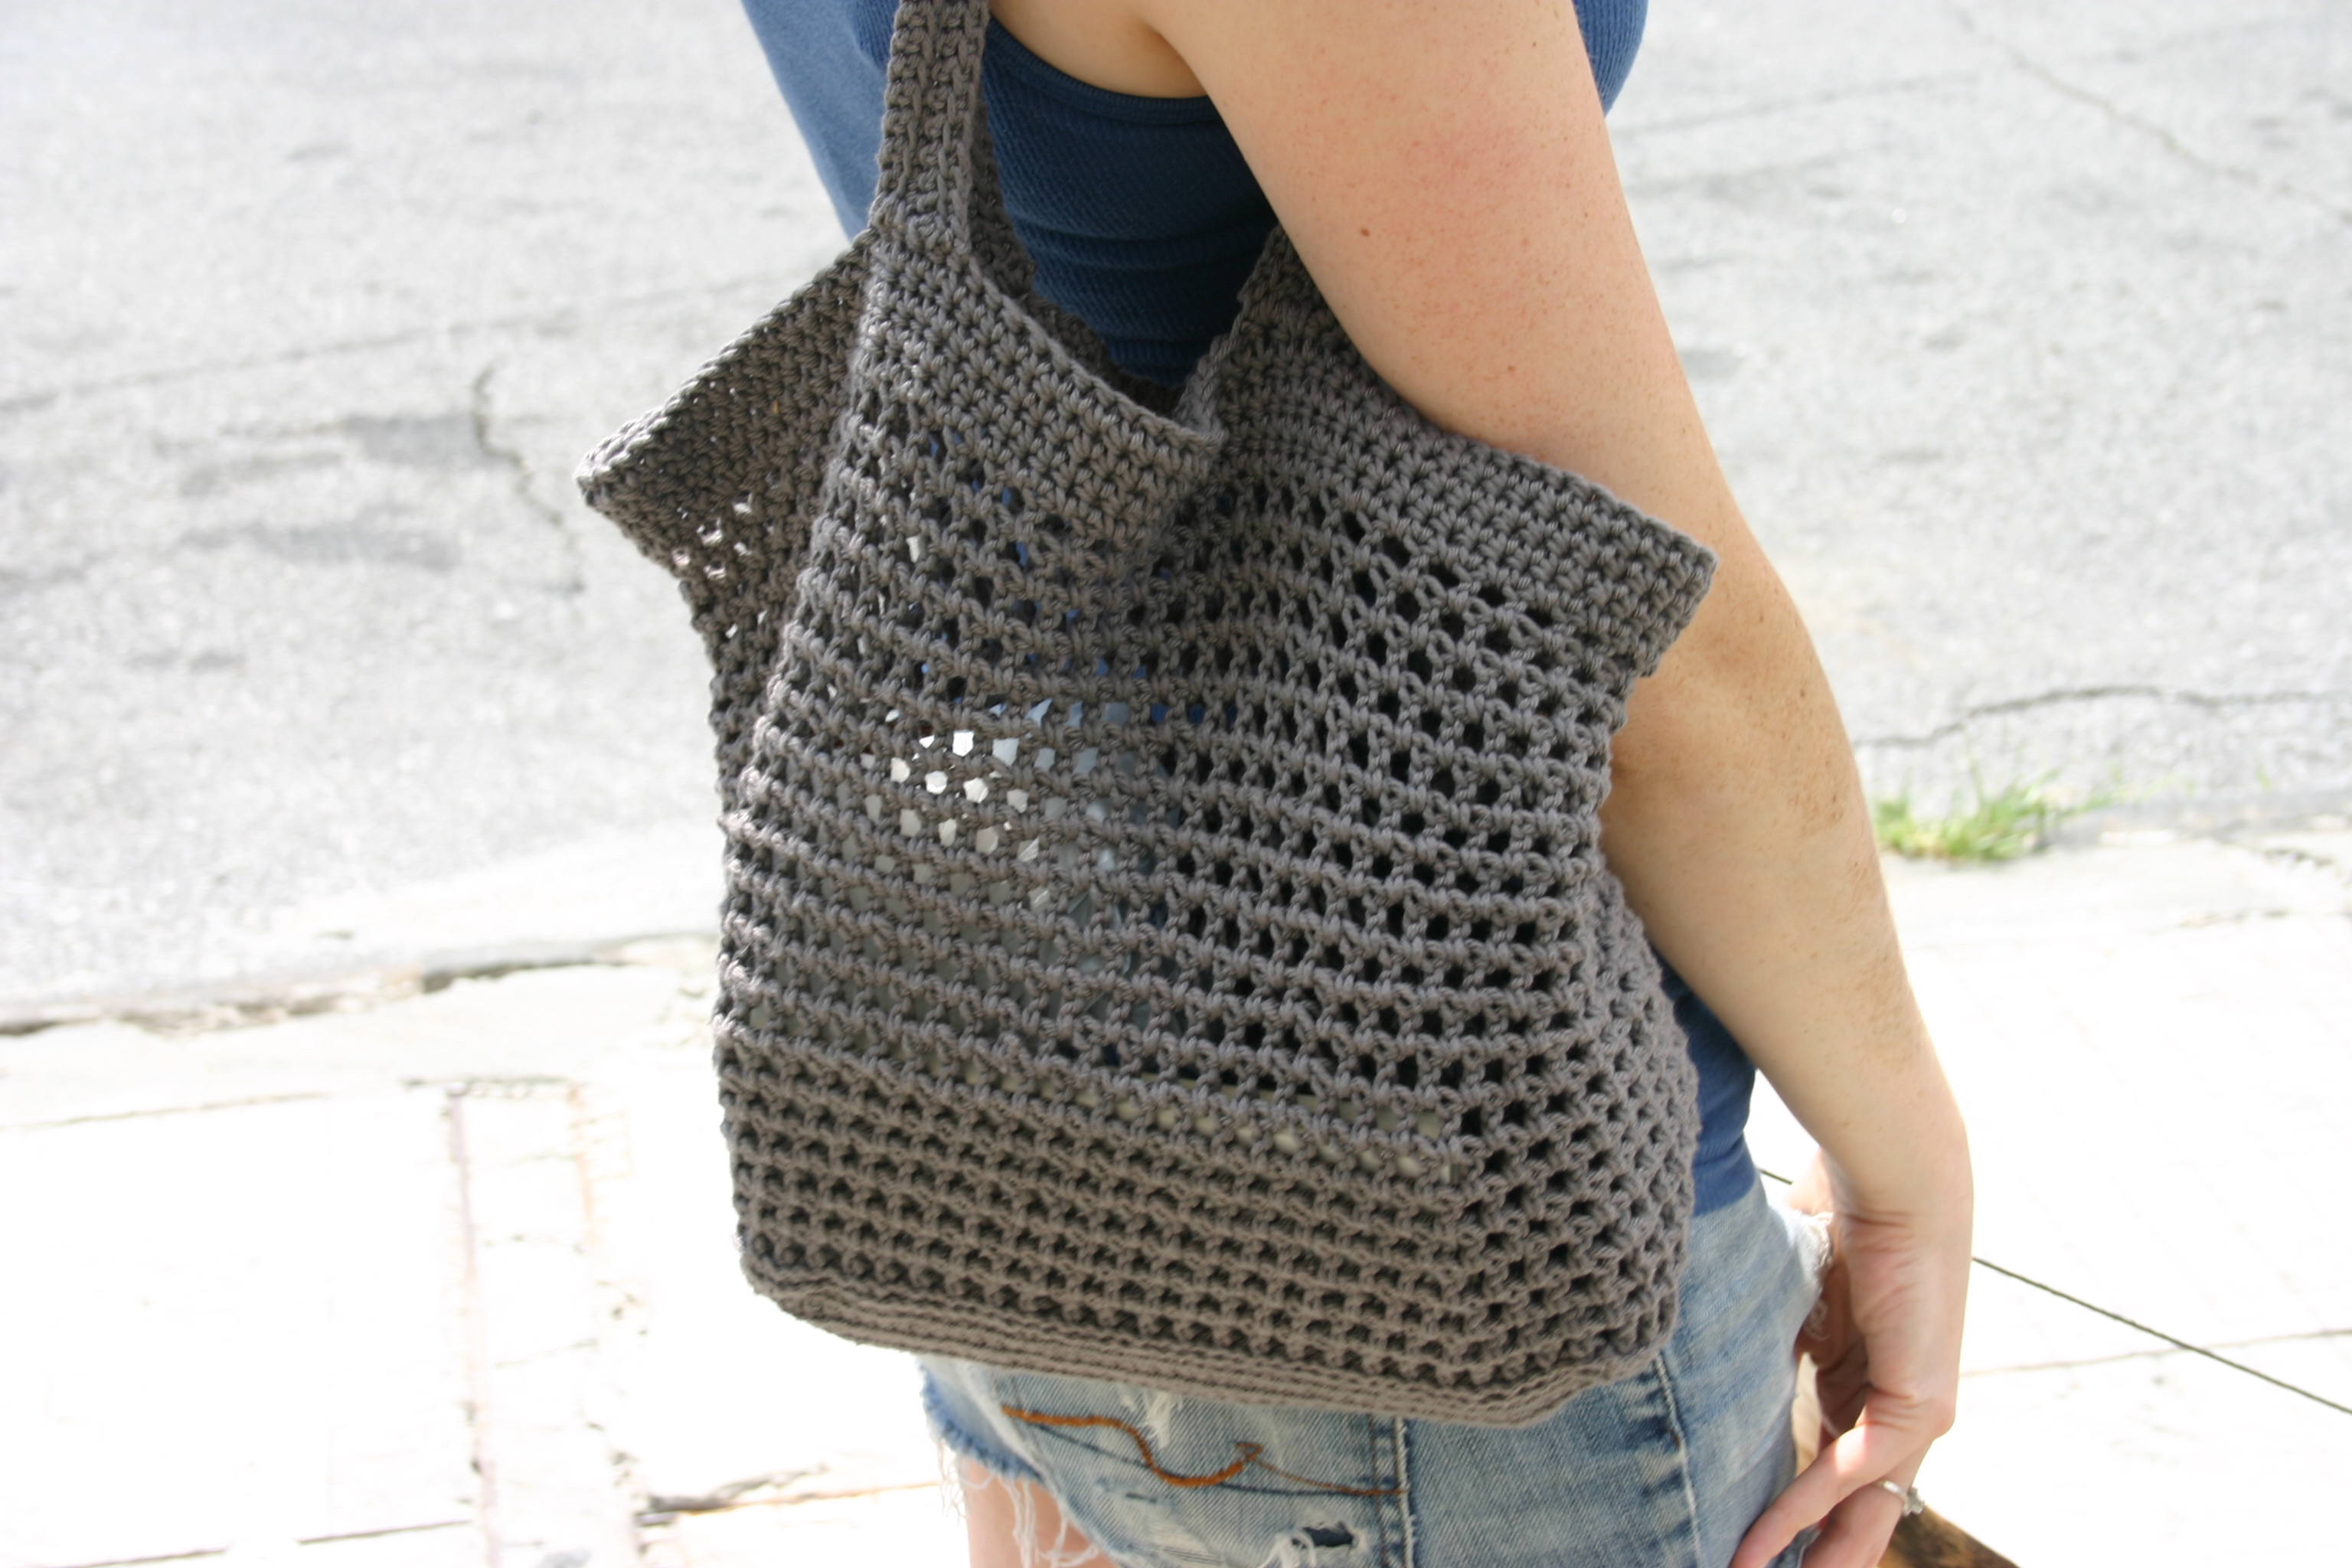 Updated Market Bag - A Free Crochet Pattern